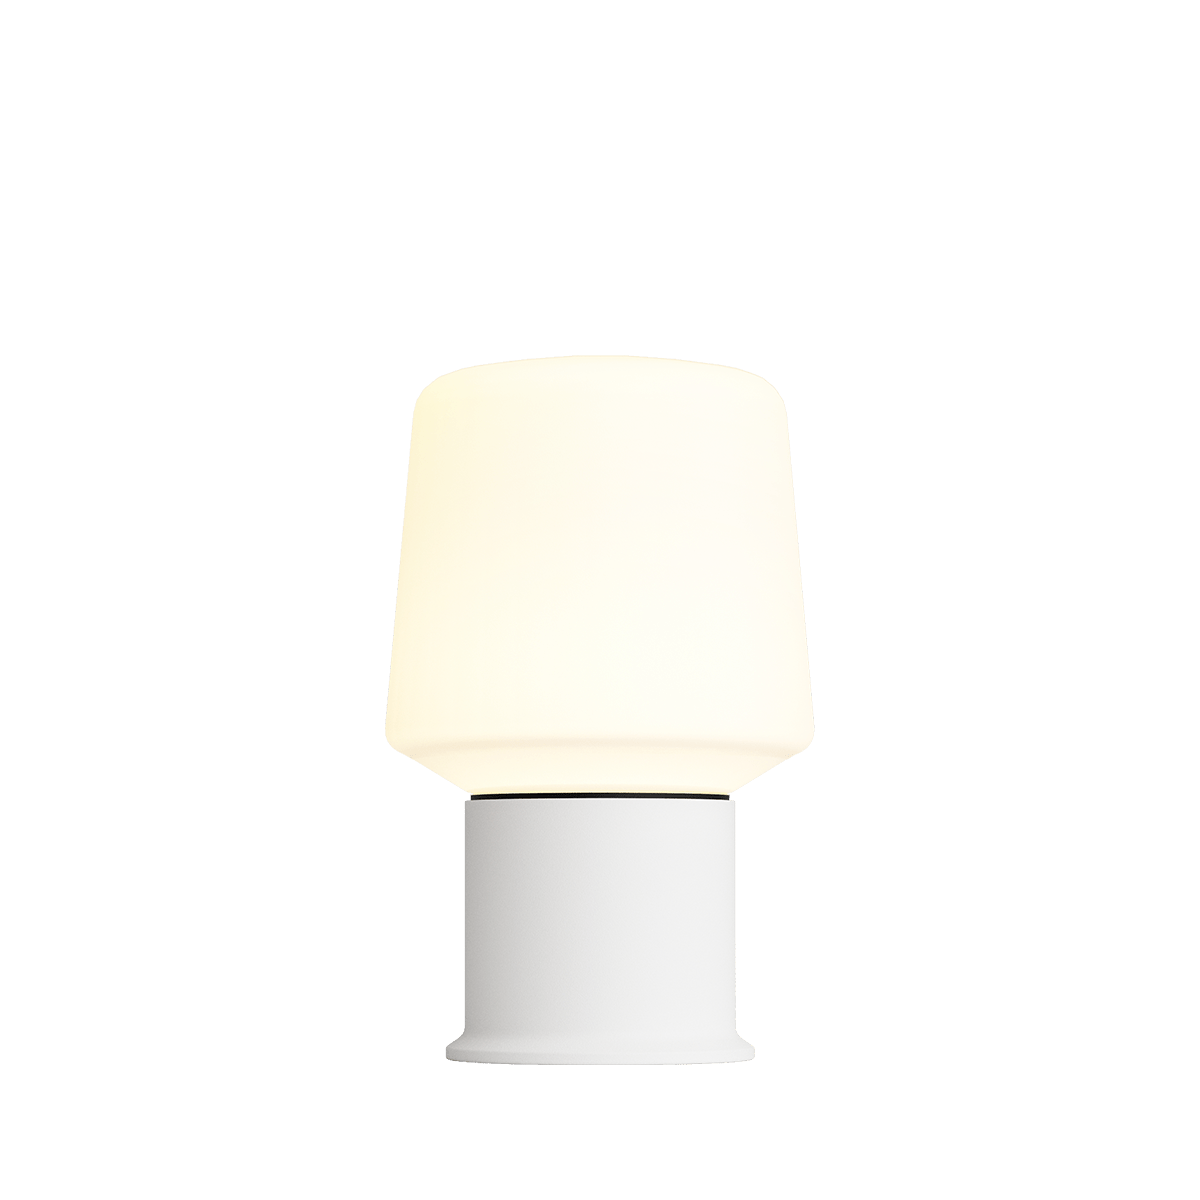 variant_600220% | Ambience - Lamp Intelligent + London base - White 5 | SACKit